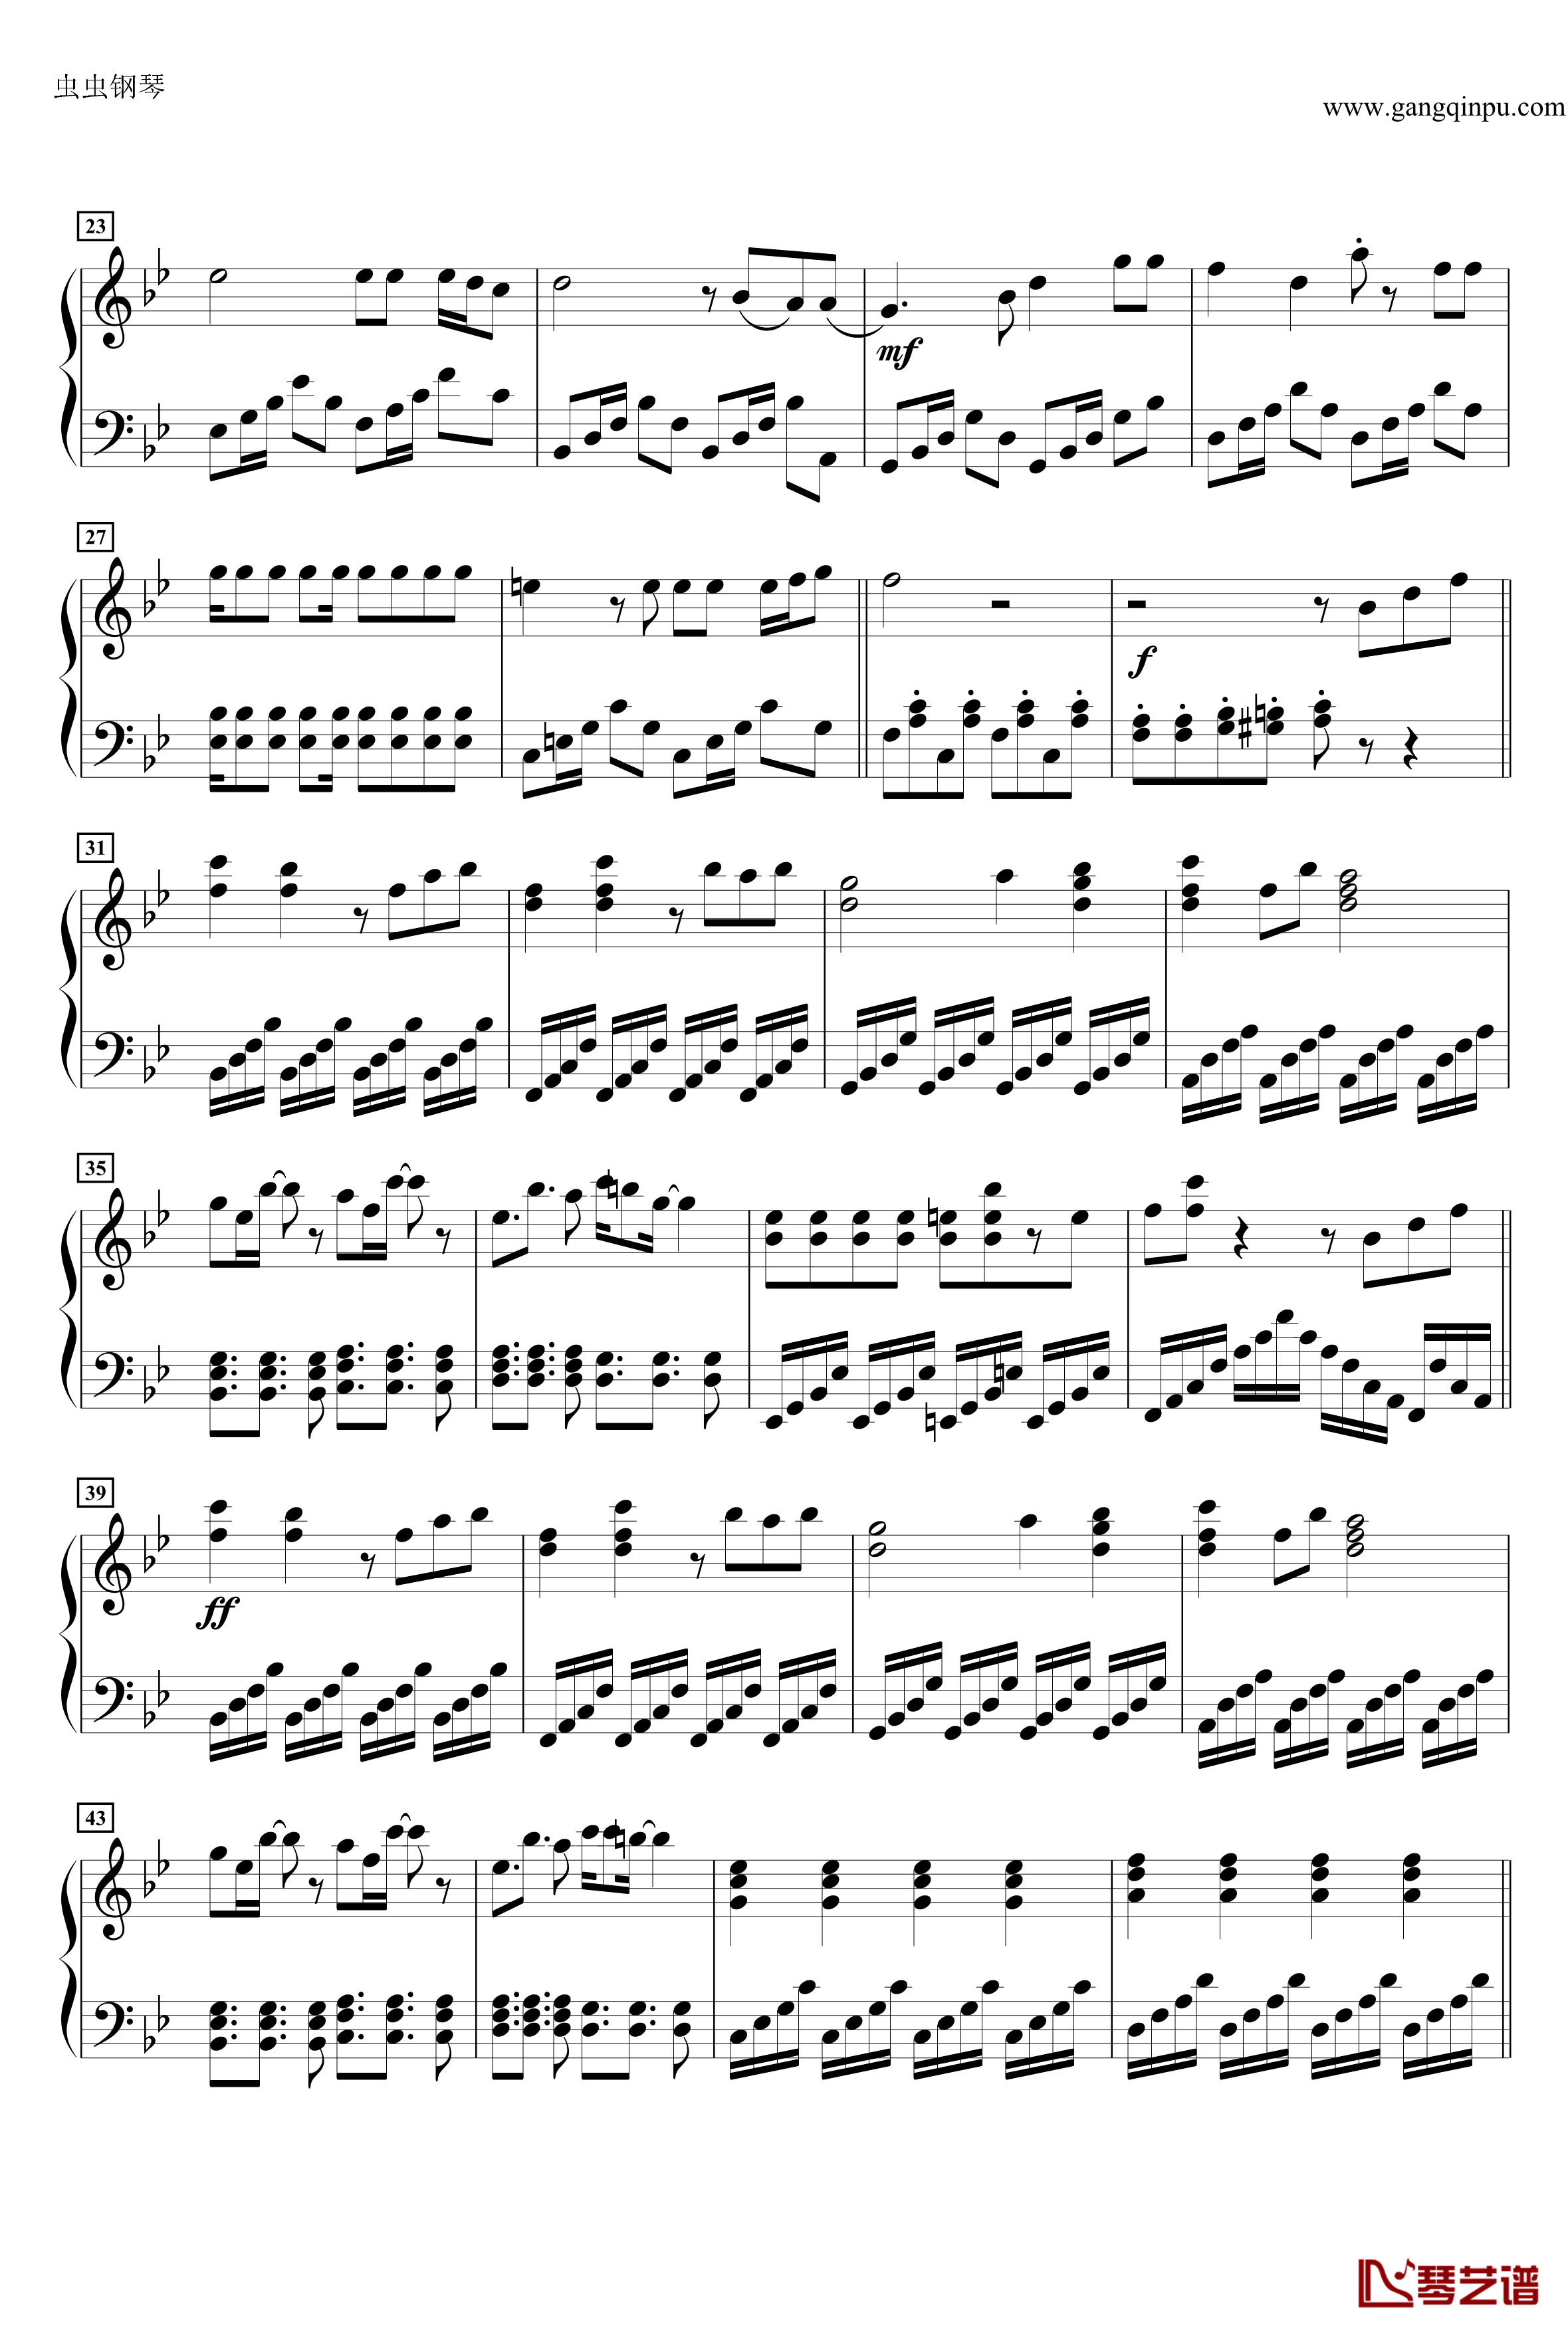 solo Piano钢琴谱-黄金拼图-きらめきいろサマーレインボー~2